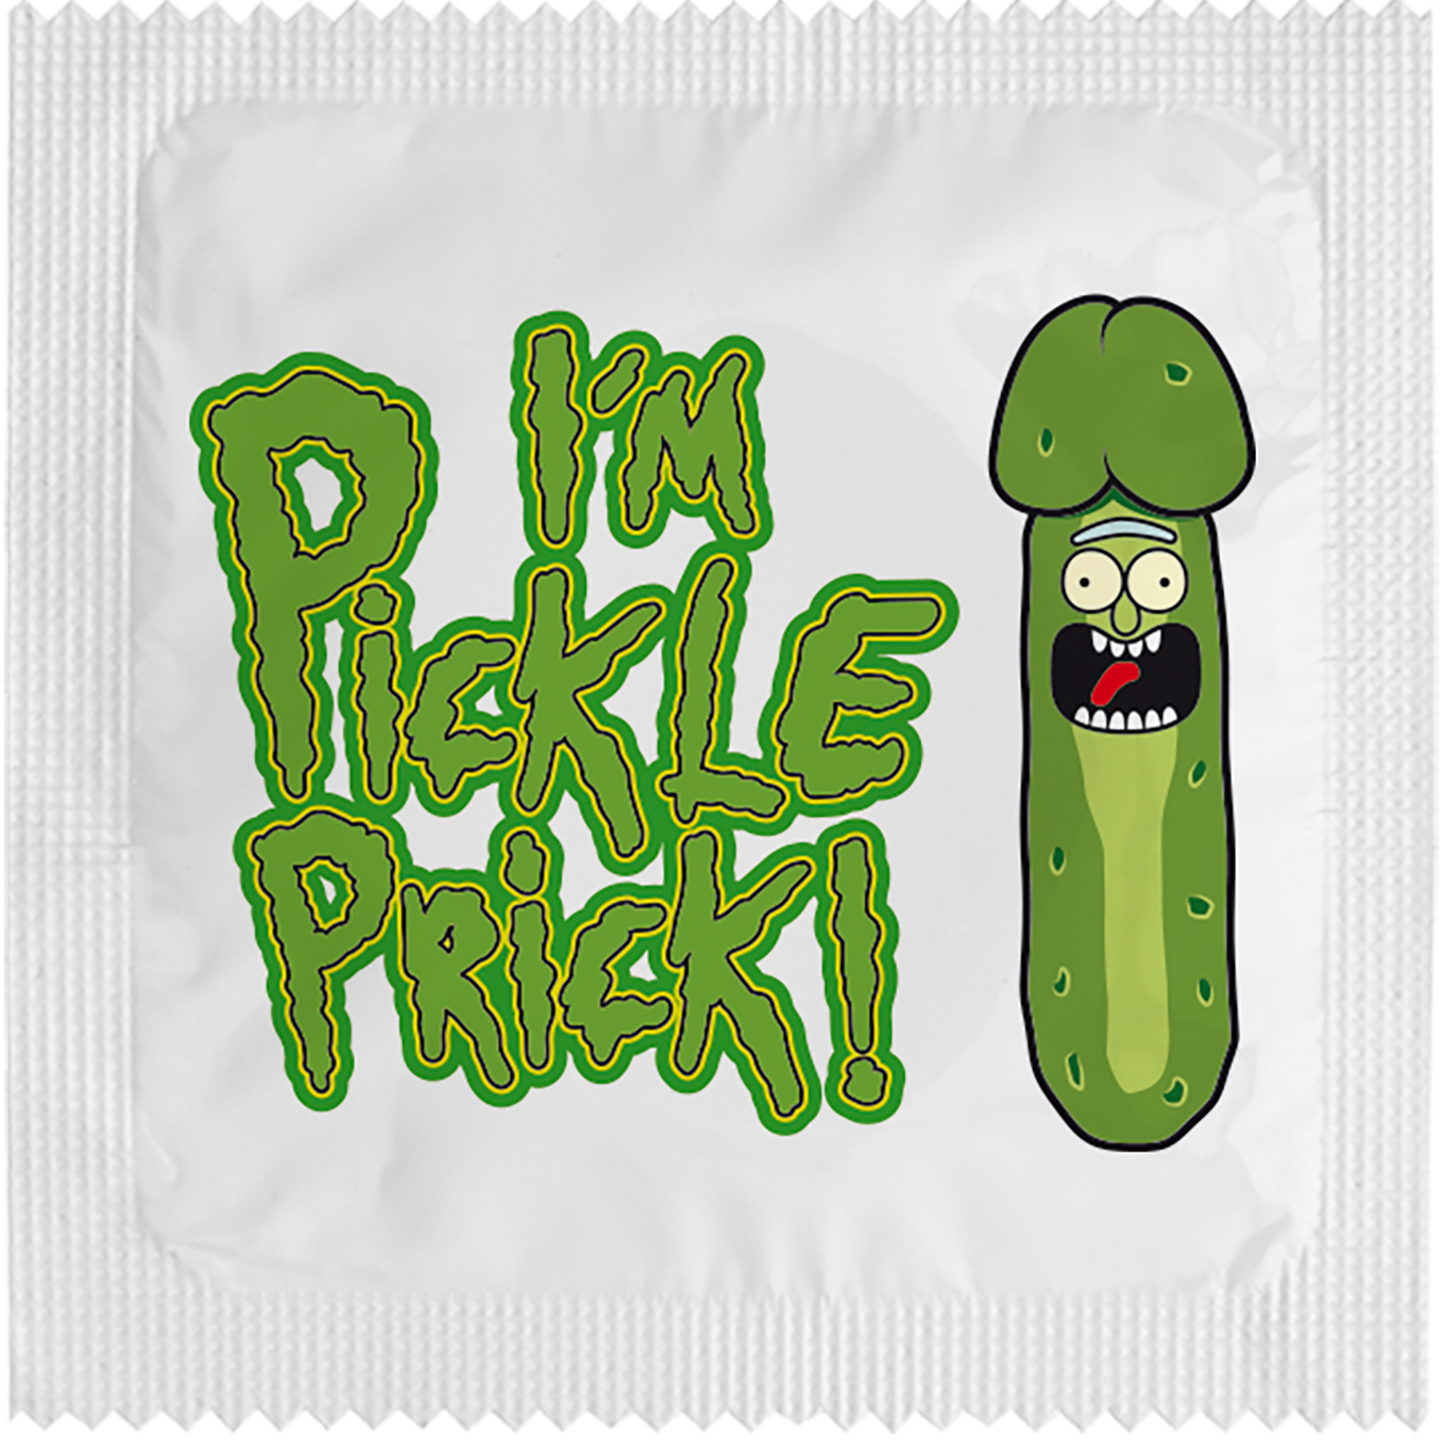 Image of funny condom "I'M Pickle Prick"